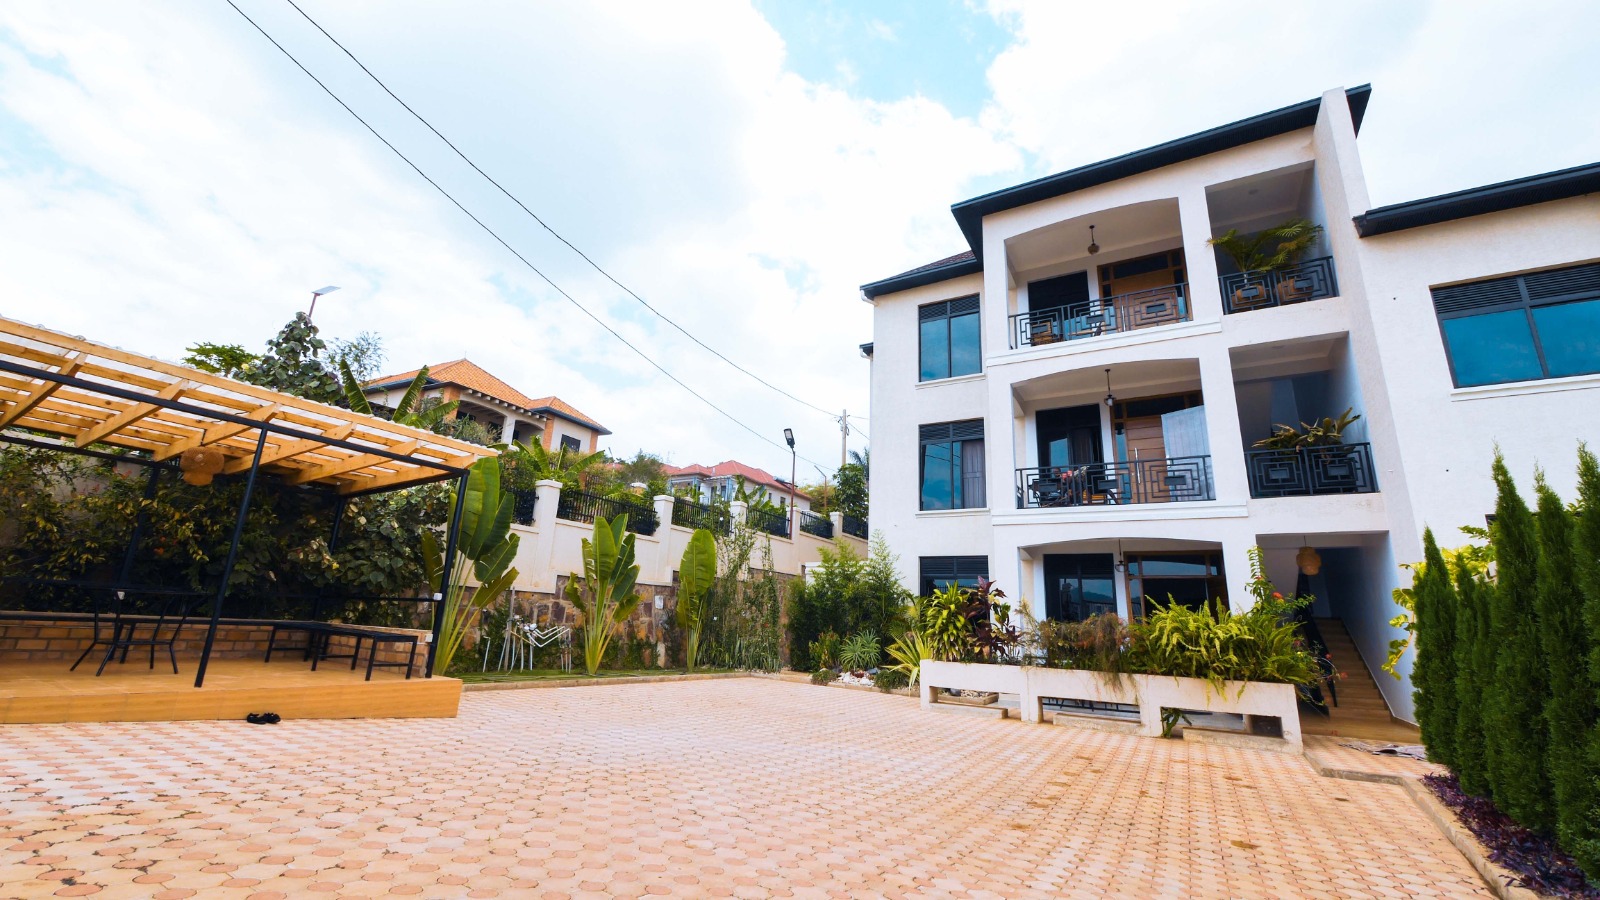 FF109 Kibagabaga nice house for rent in Kigali Rwand